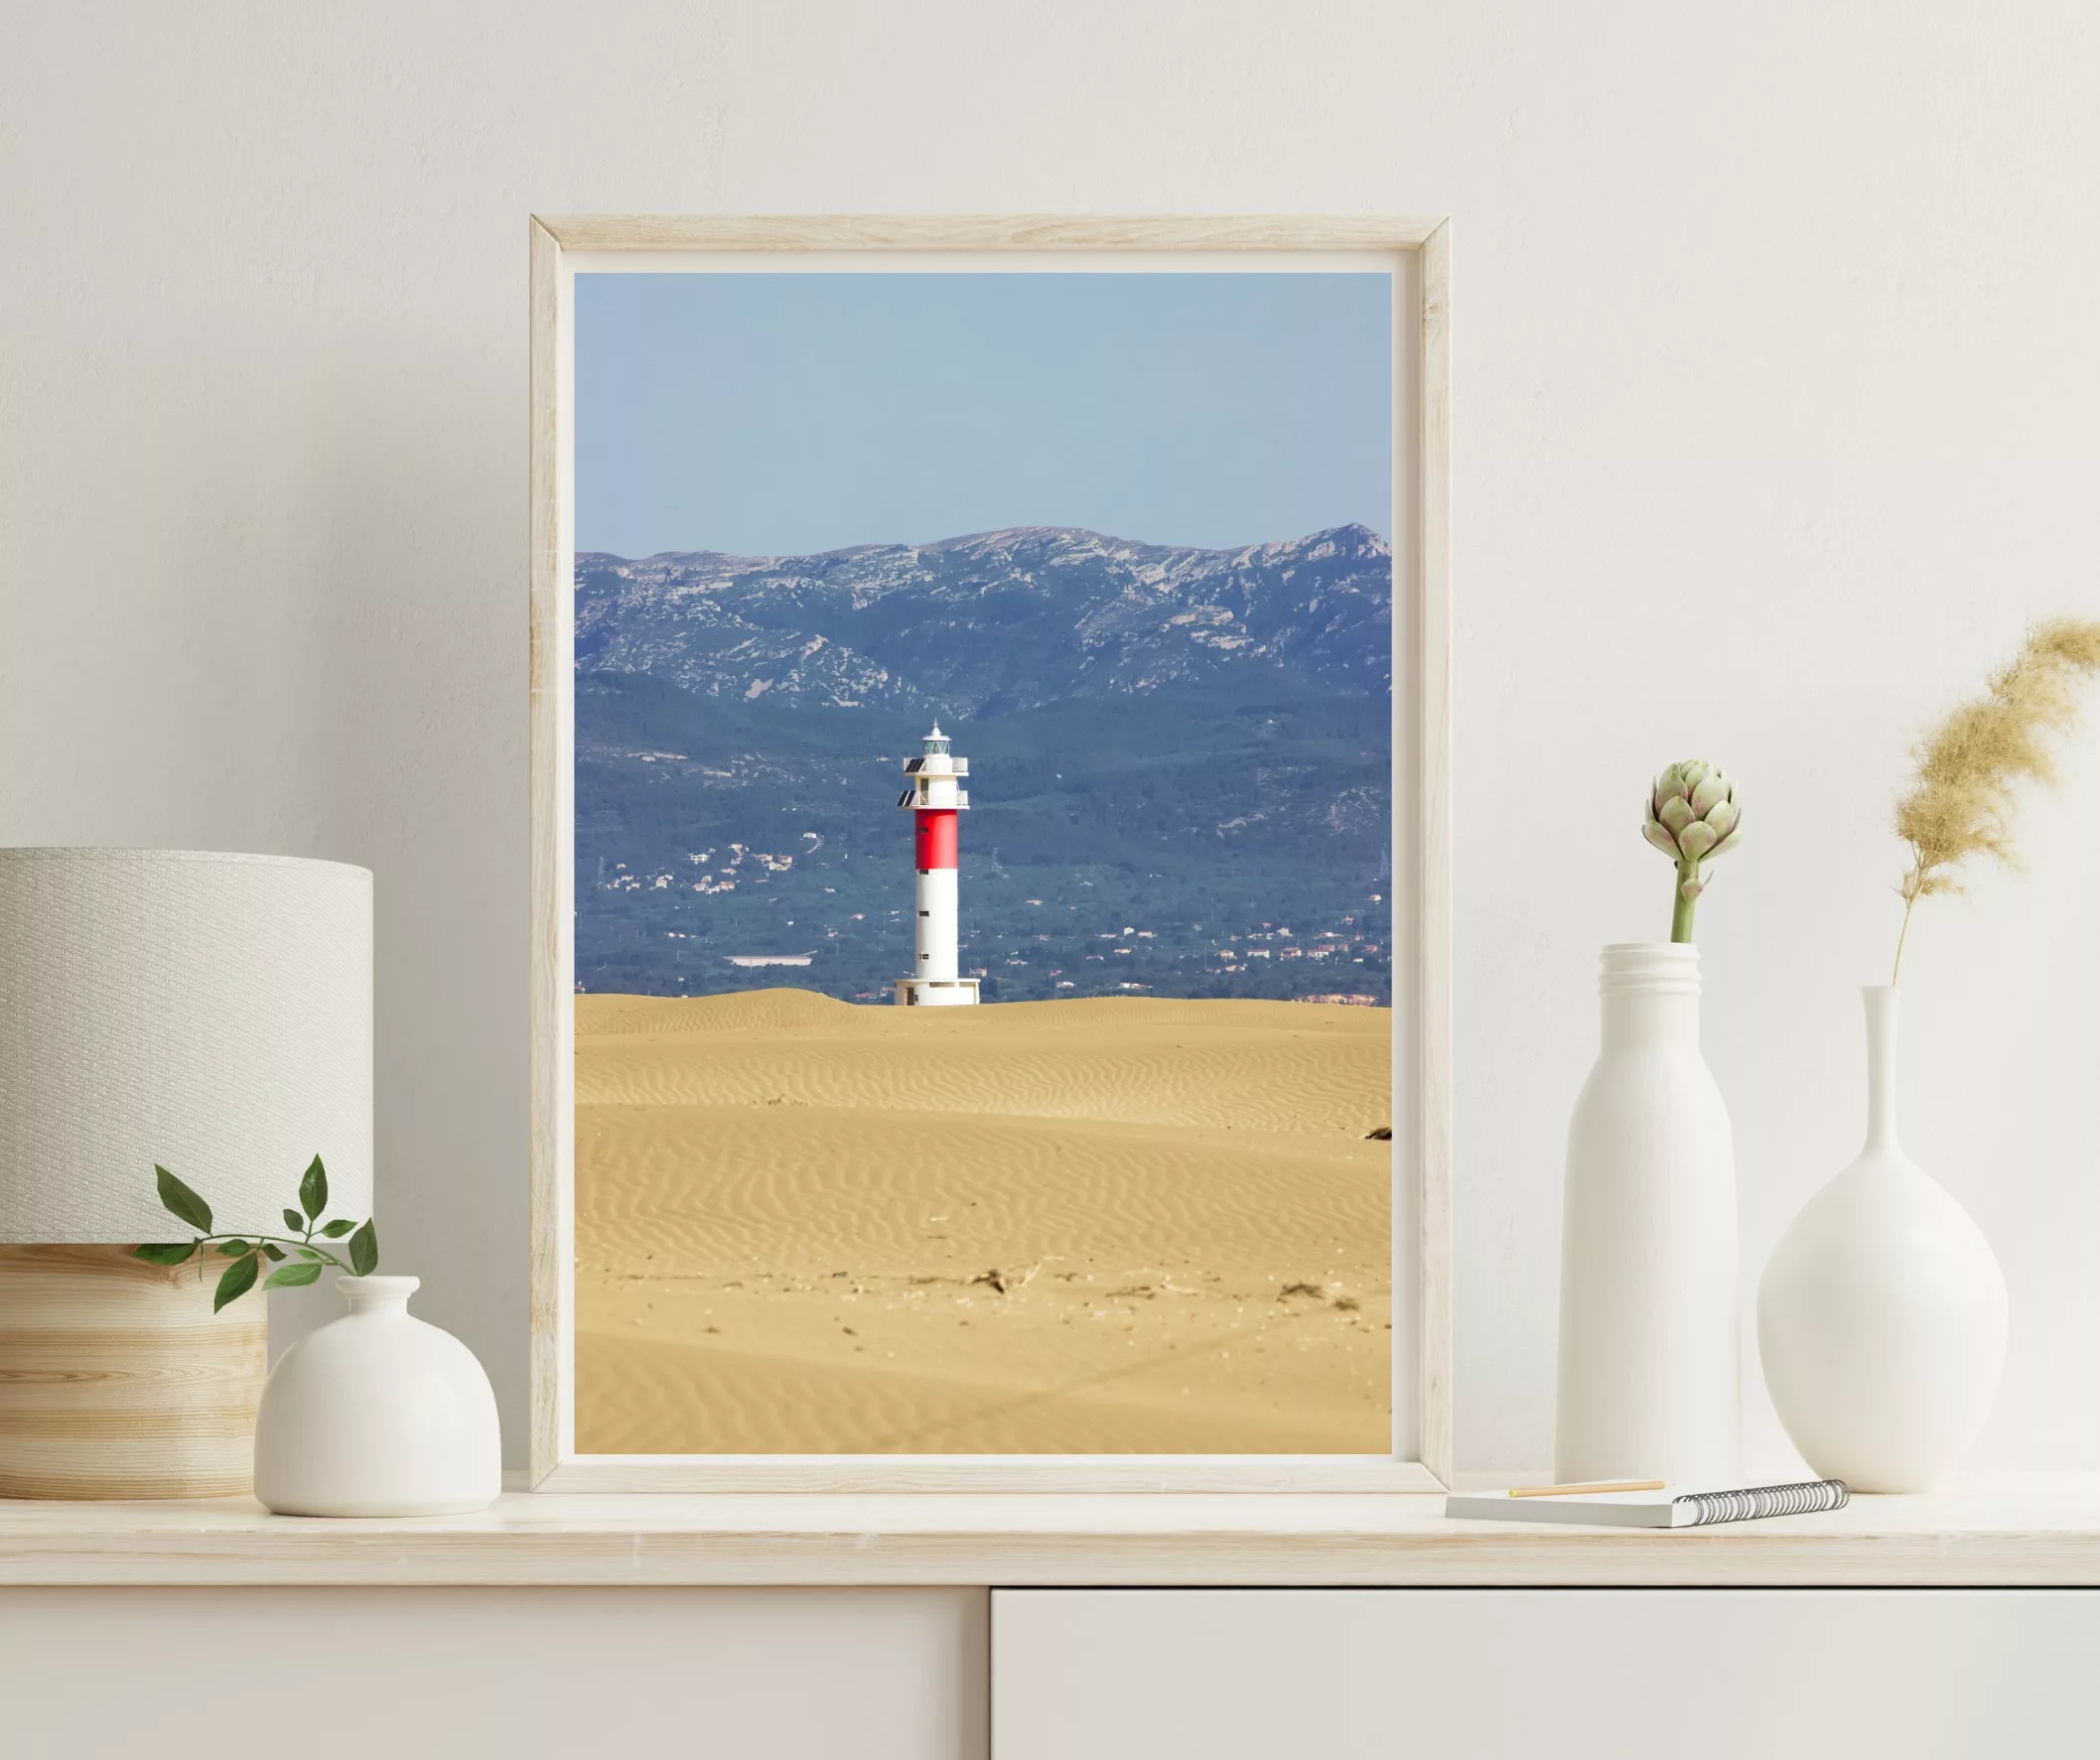 The Lighthouse 1 photo print